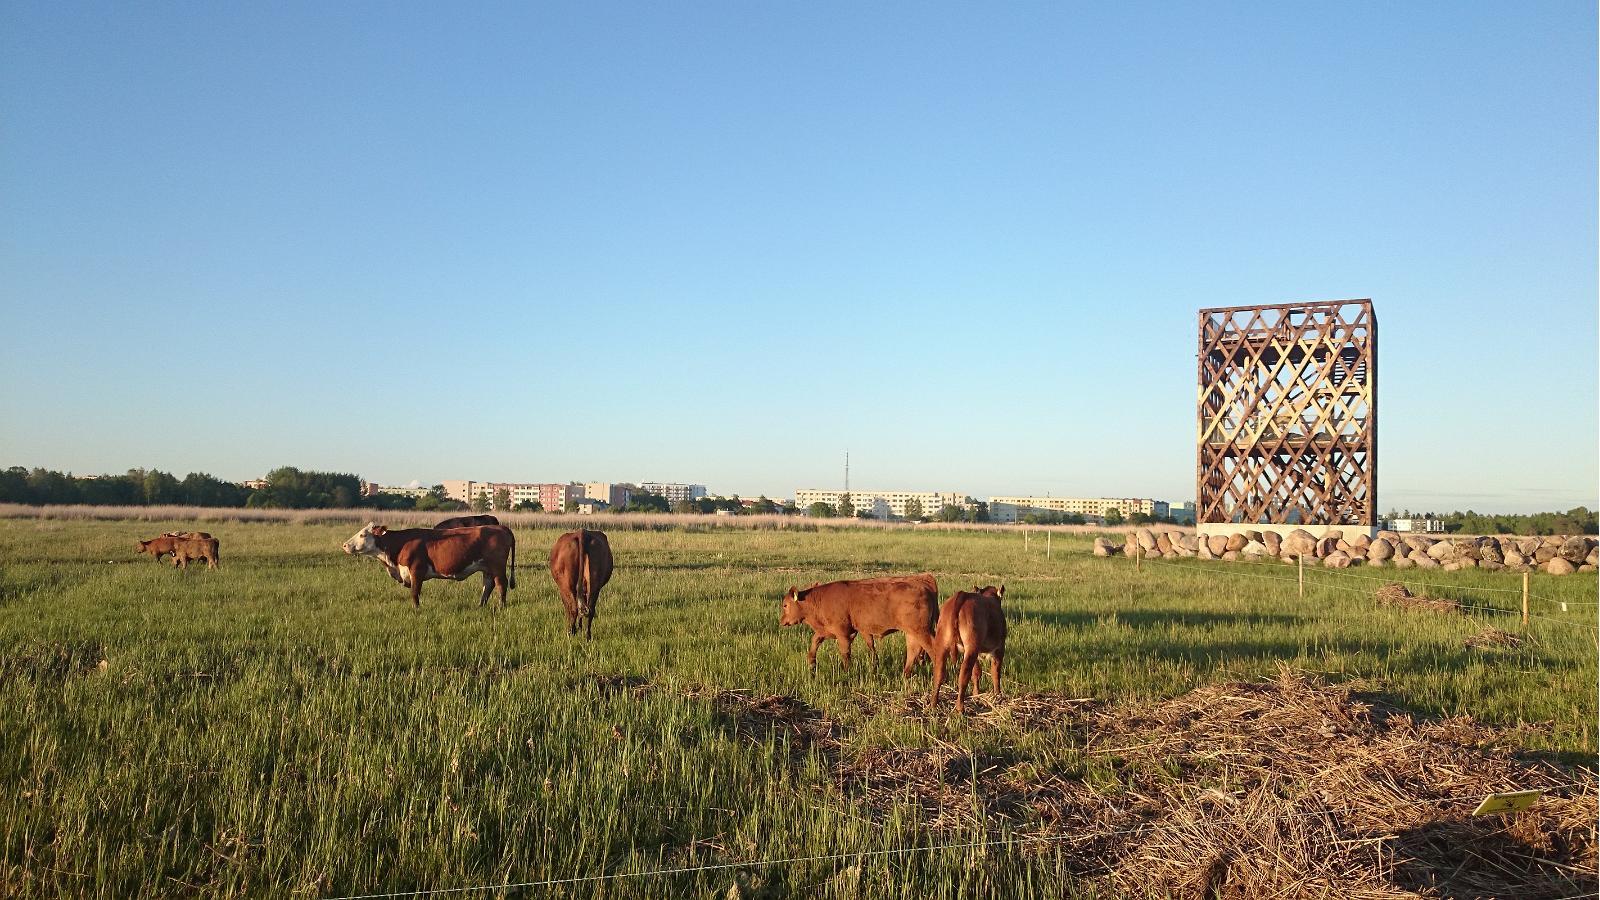 Pärnu Coastal Meadow Nature Reserve, observation tower, and cows